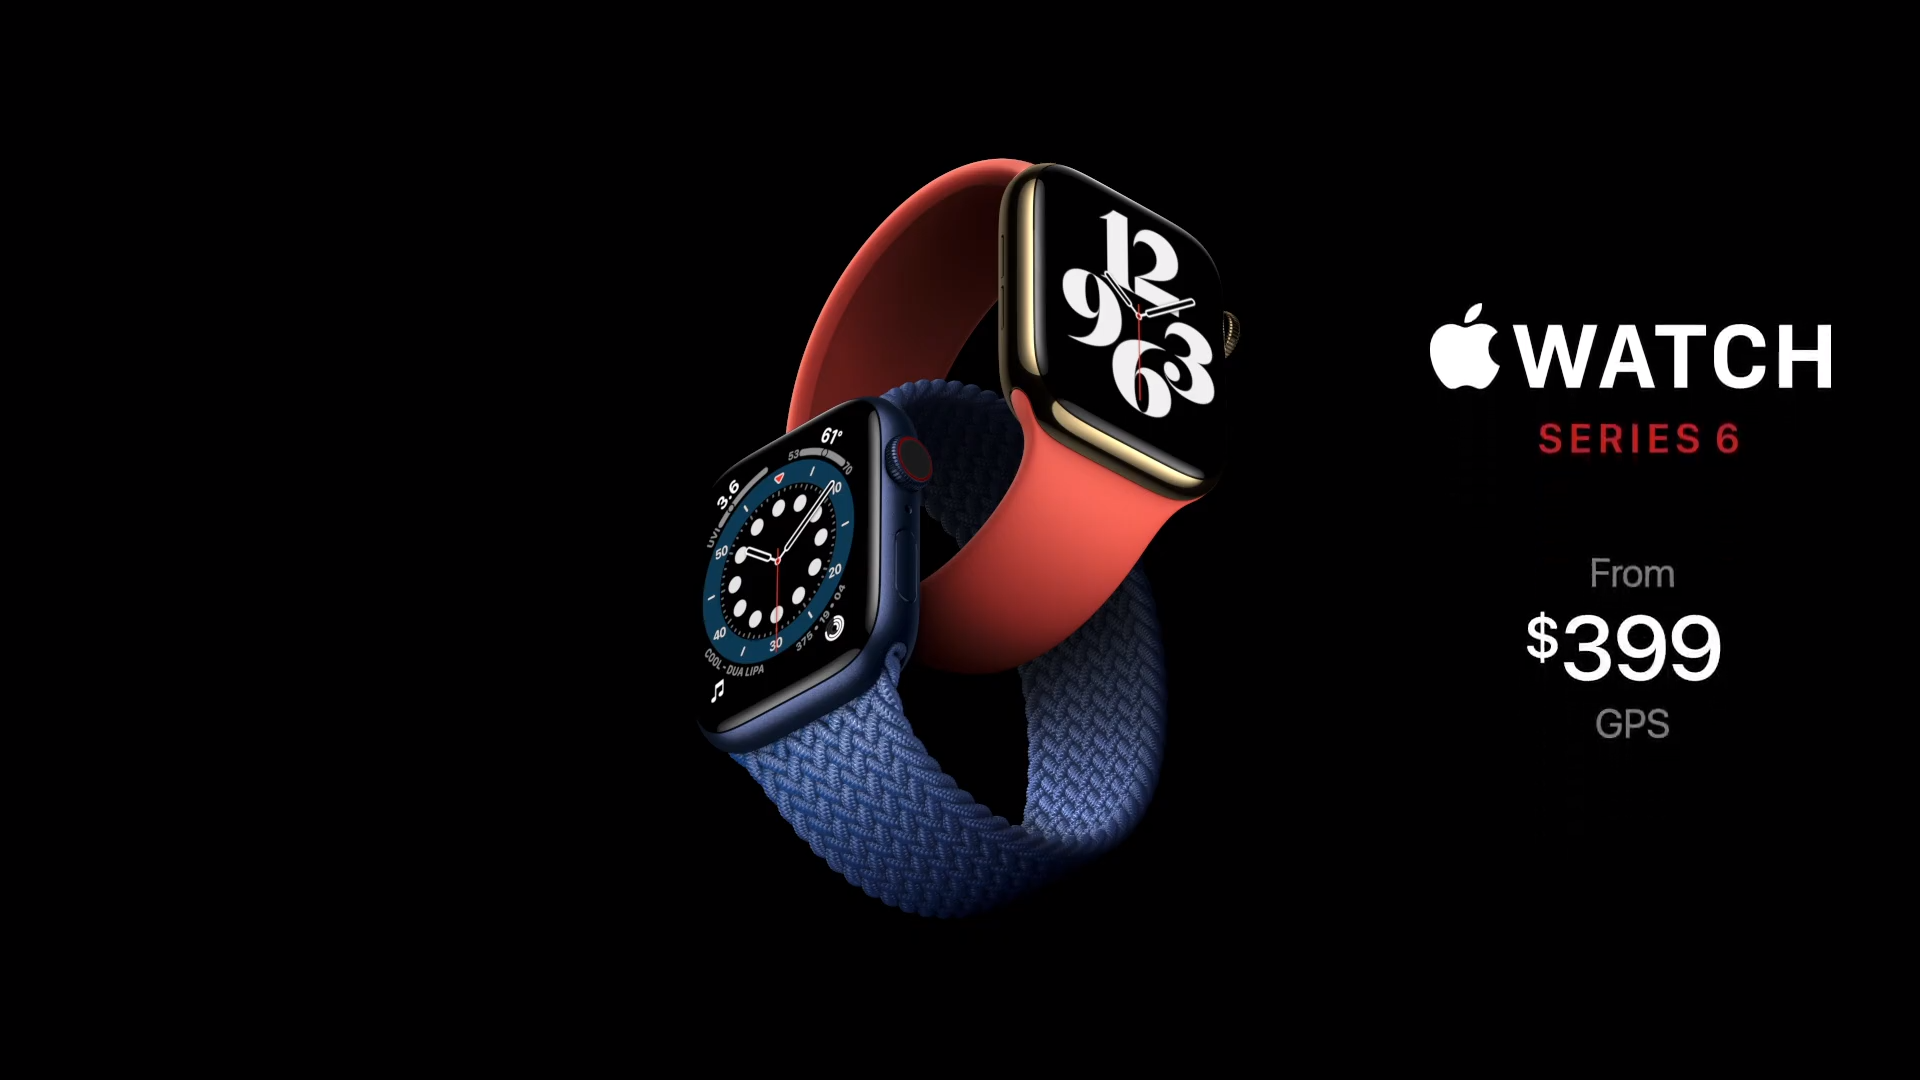 Apple watch series 6 price